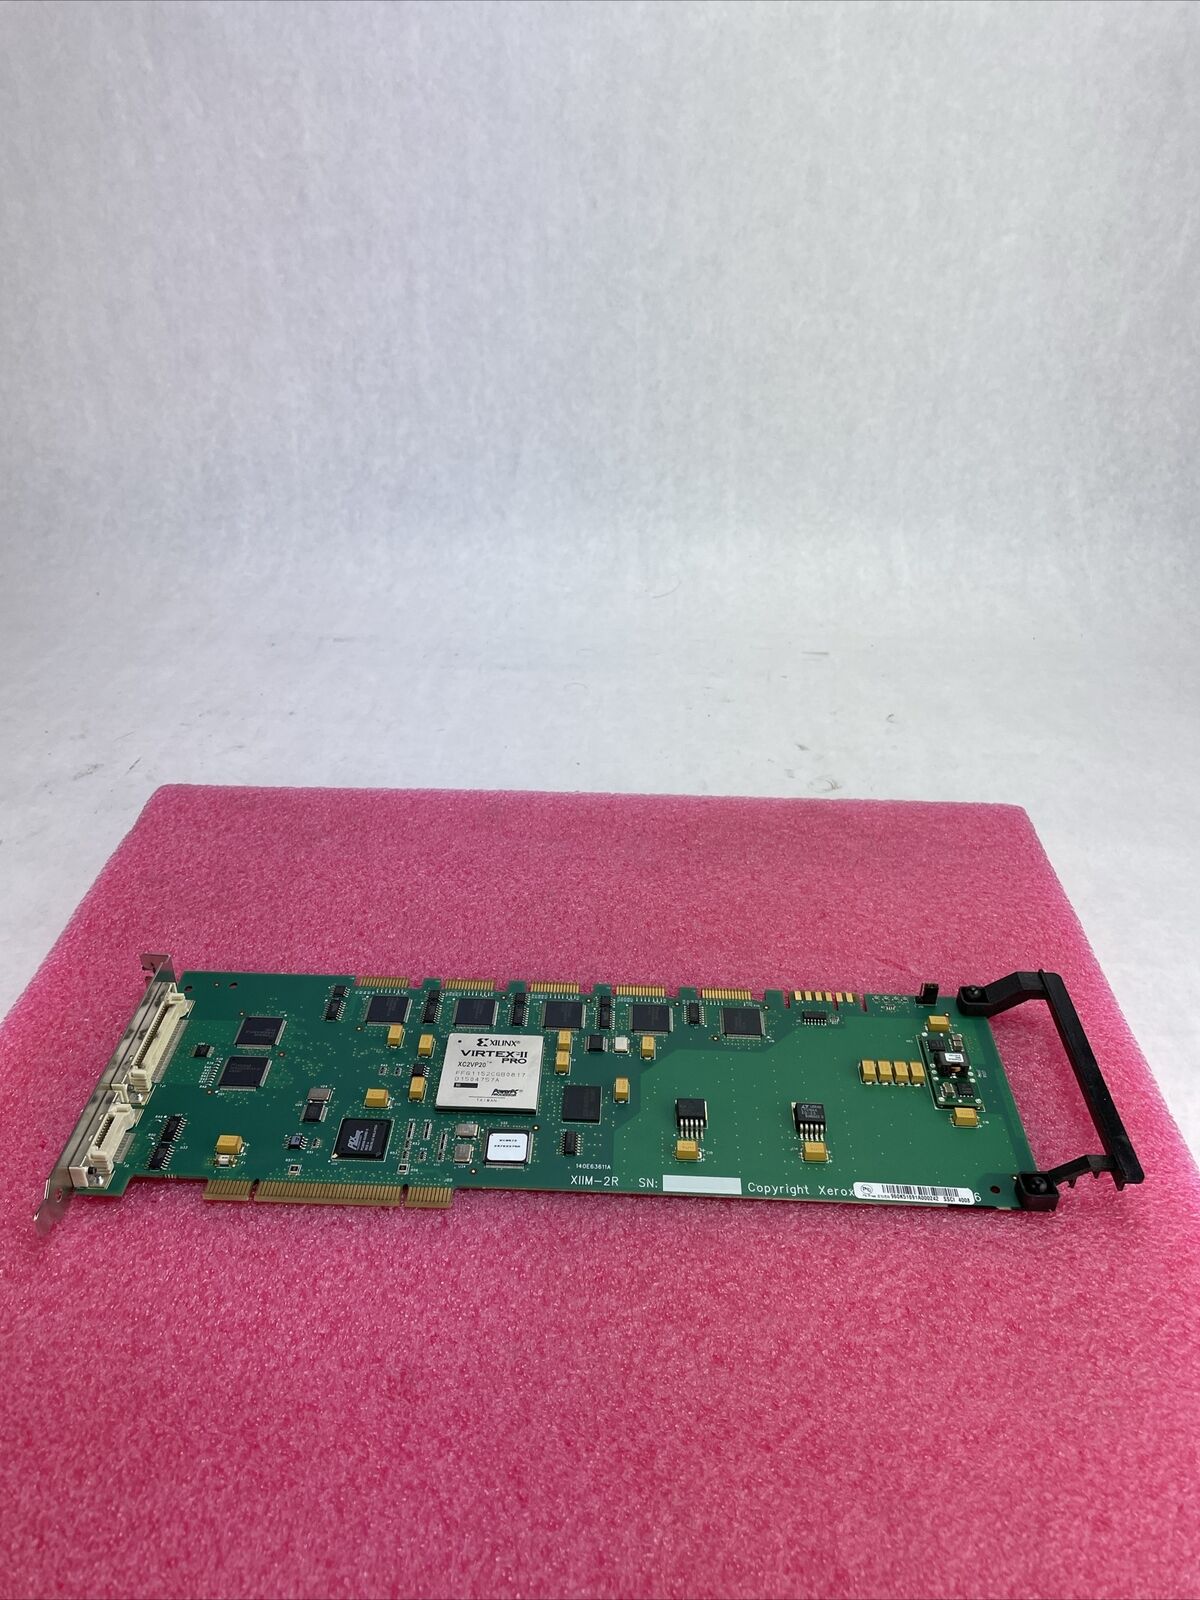 XIIM-2R 32933A PCI Interface Controller